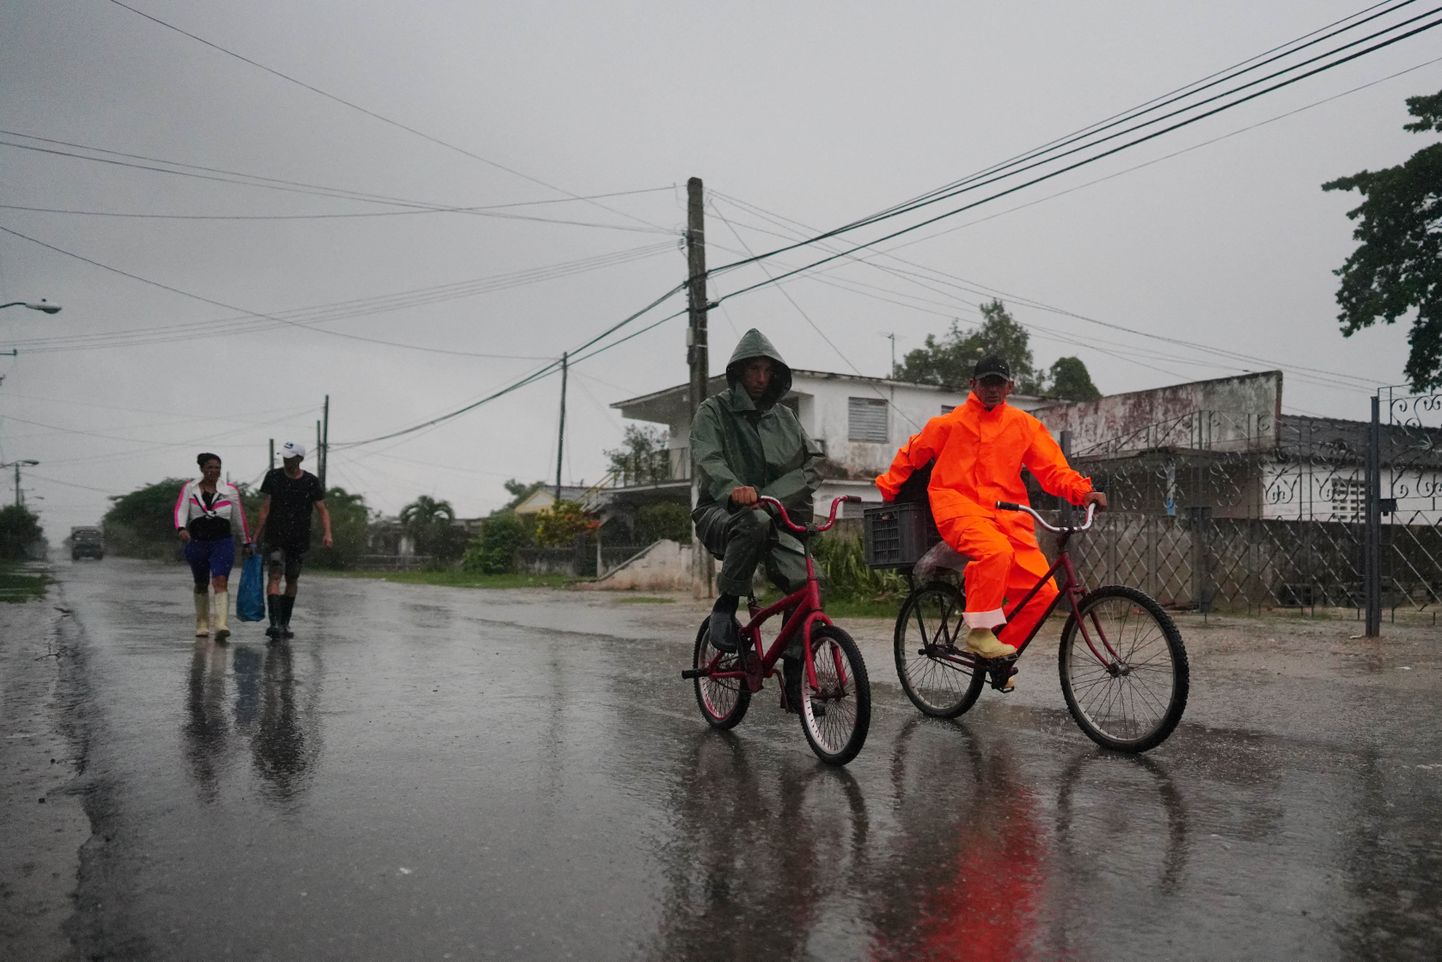 Kuubalased orkaani maabumise eel tormivarju liikumas.